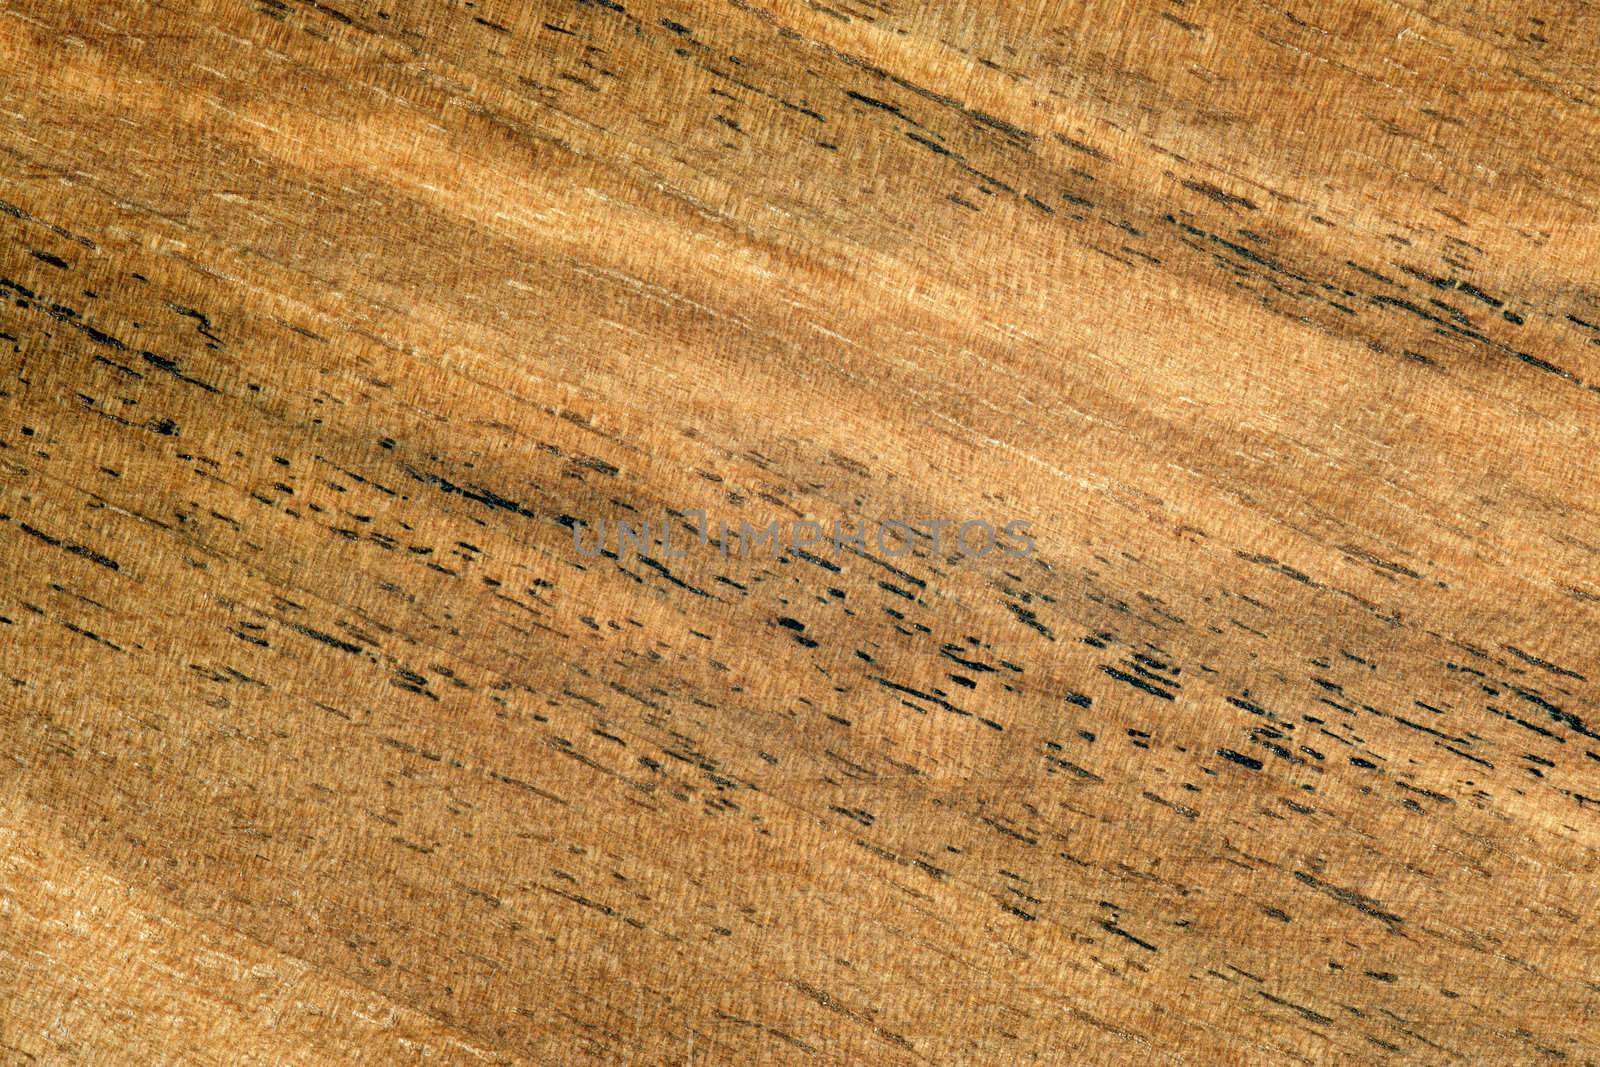 Wood grain background image.  